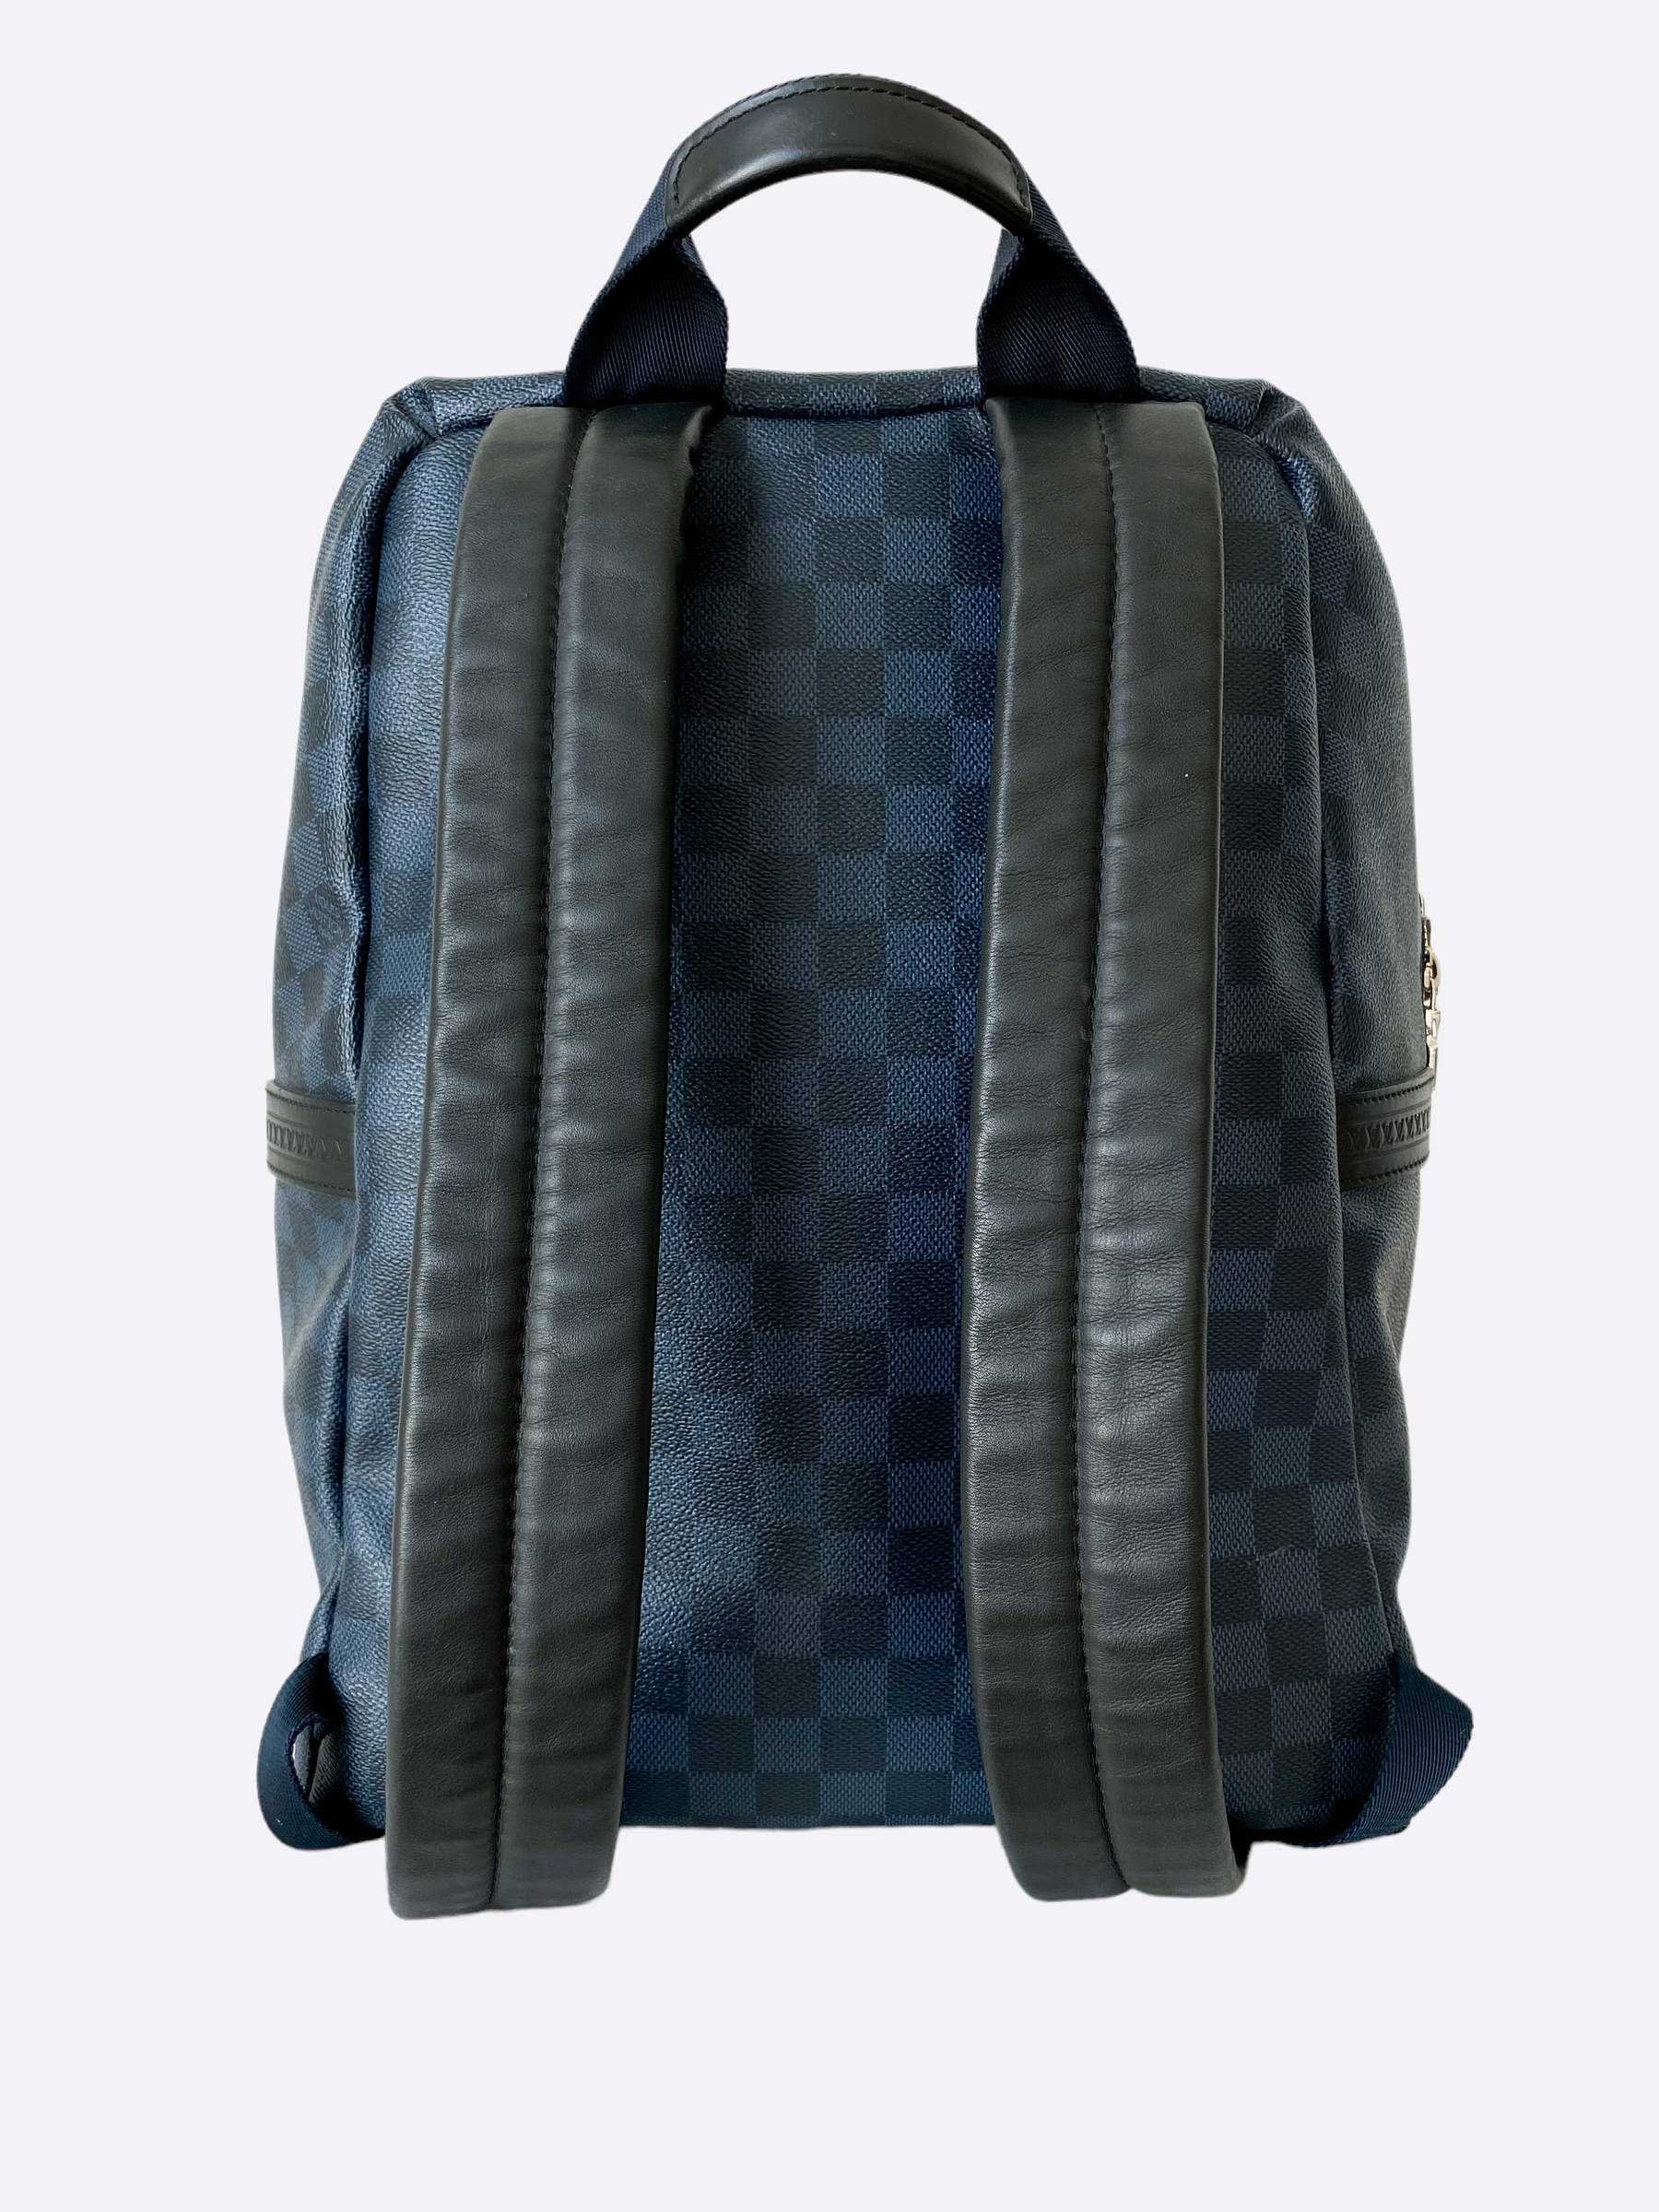 Louis Vuitton Blue Damier Backpack